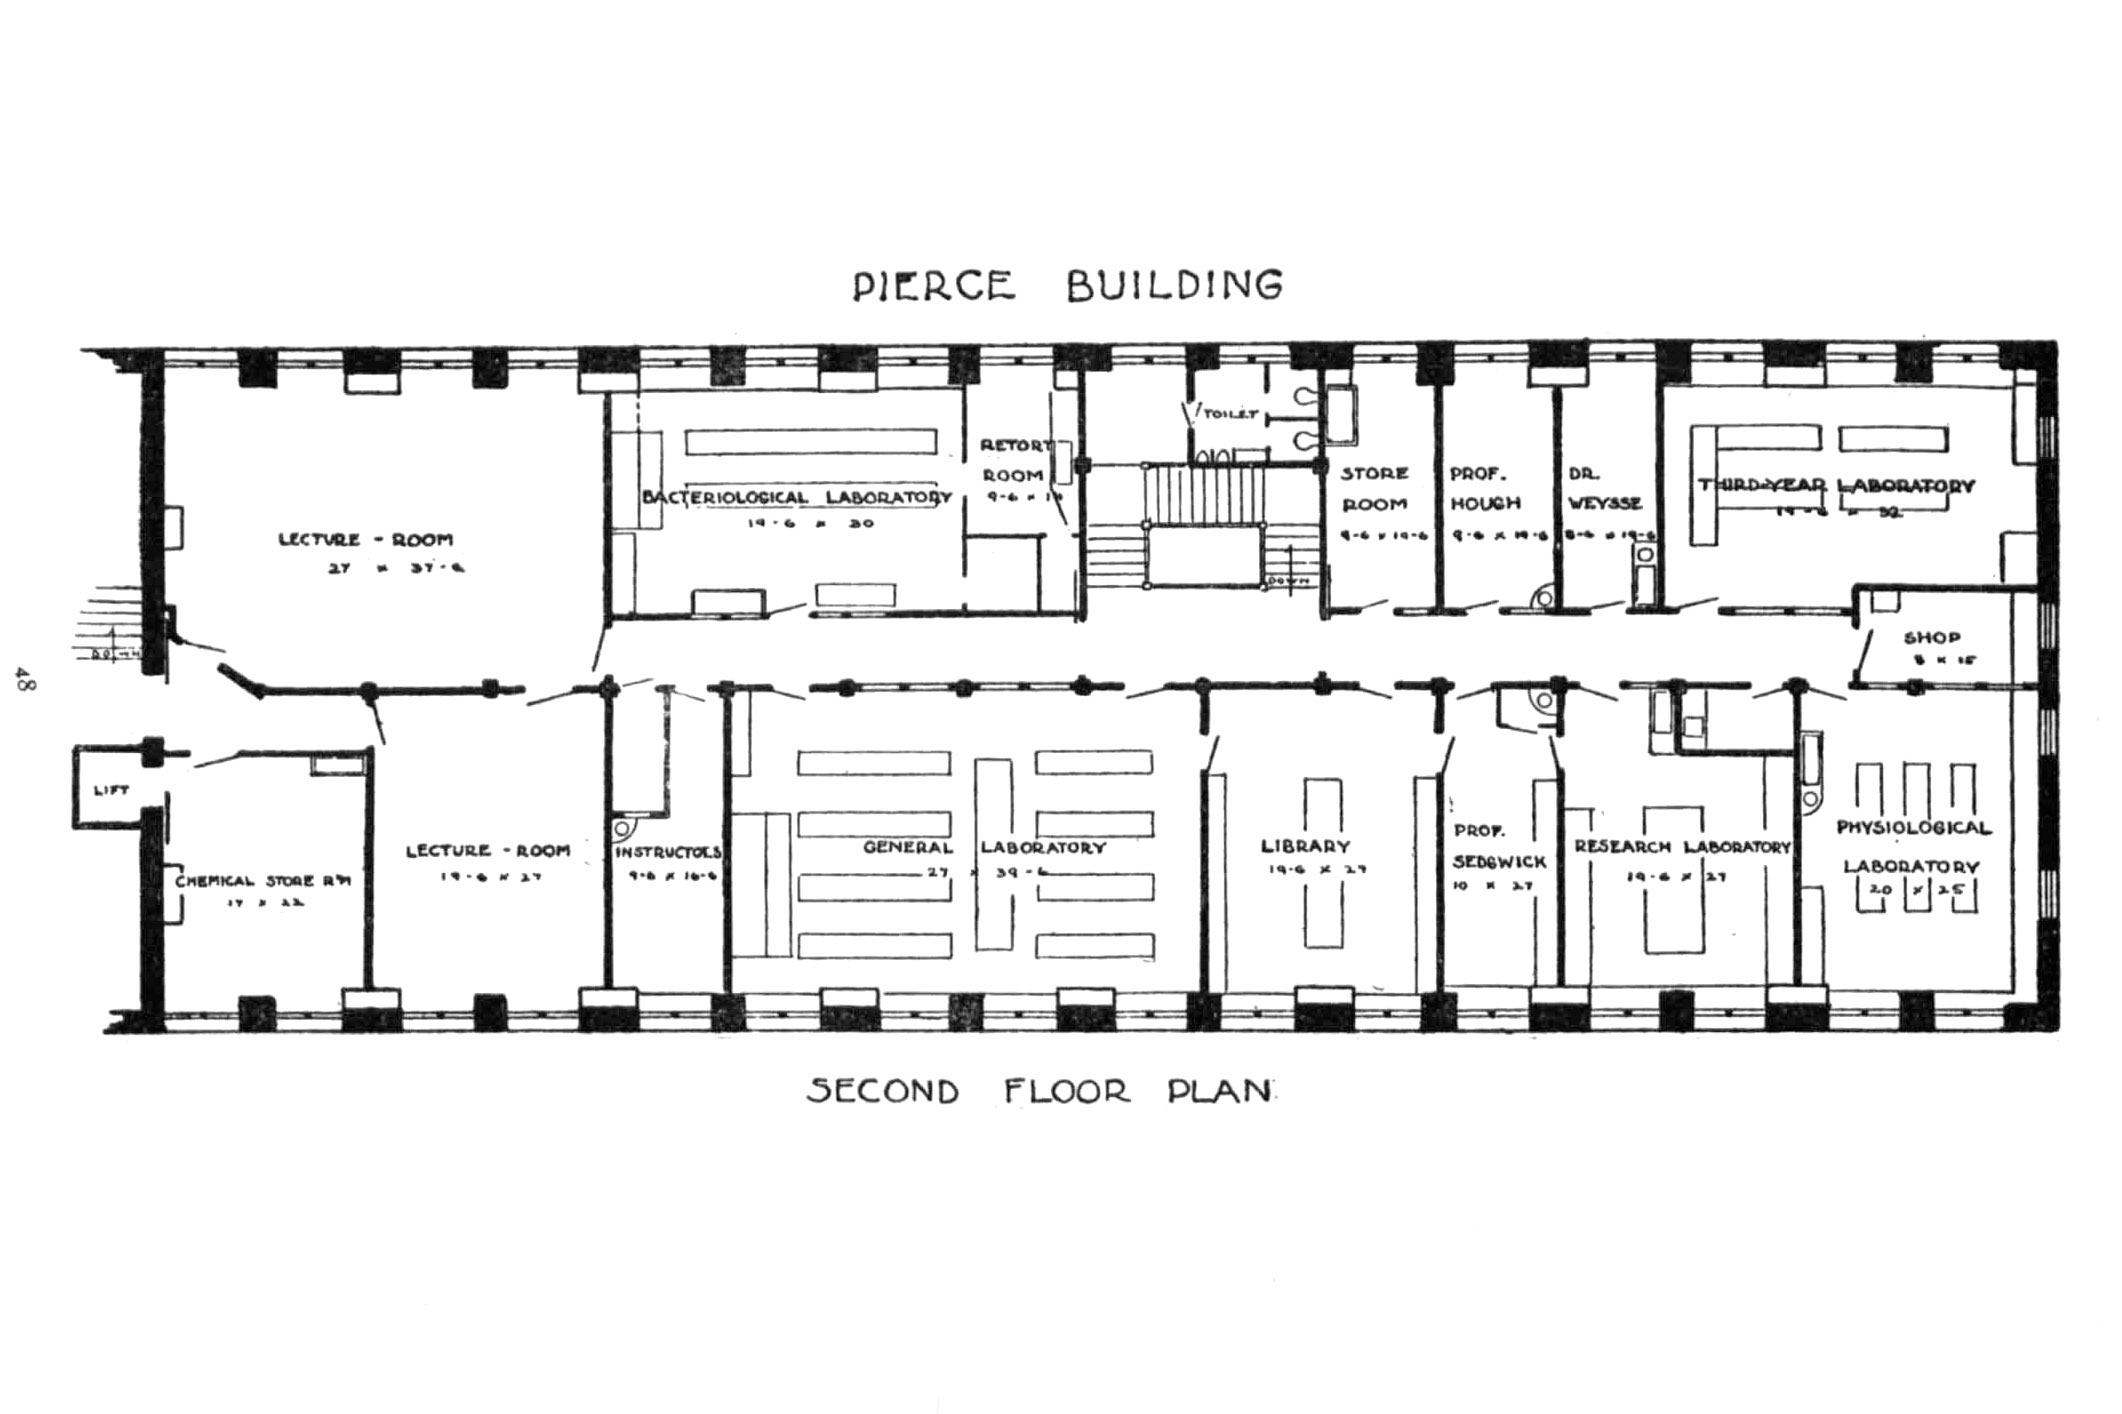 floorplan of the Pierce building